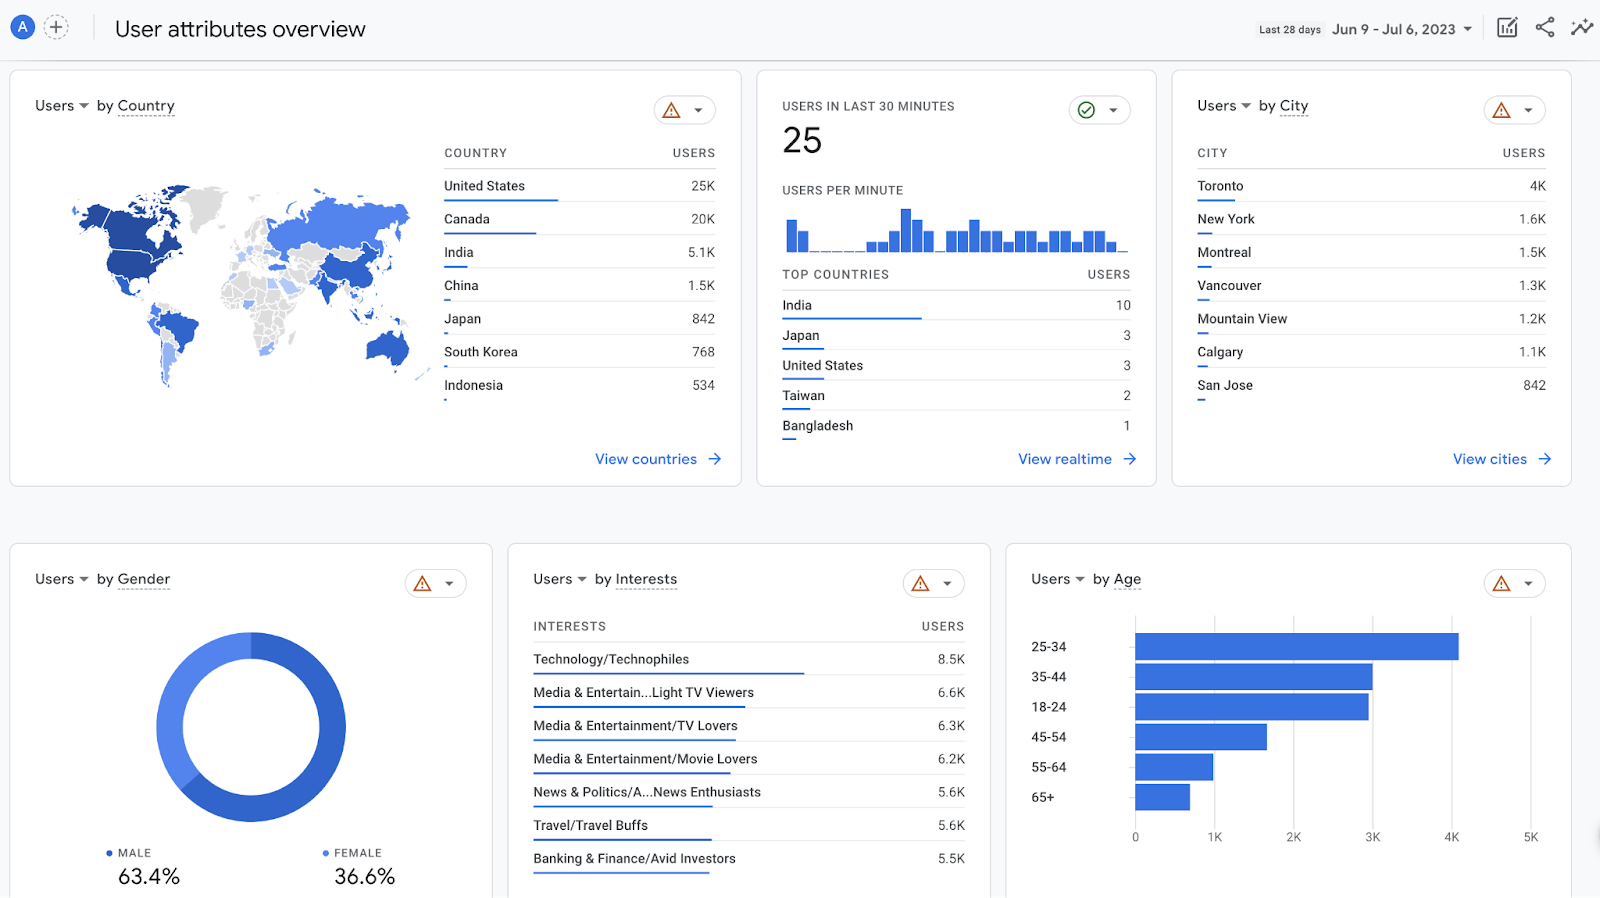 "User attributes overview" dashboard in Google Analytics